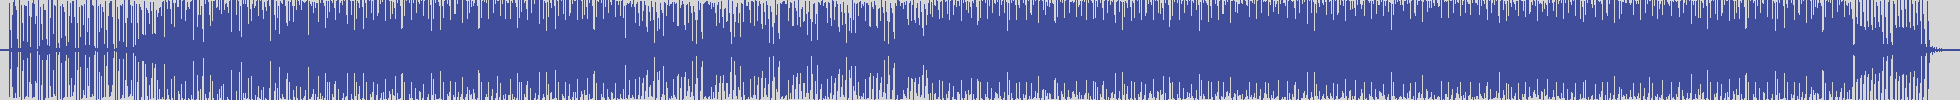 nf_boyz_records [NFY001] Uwe Theissen - Hybrid Firewire [Manitoo Mix] audio wave form